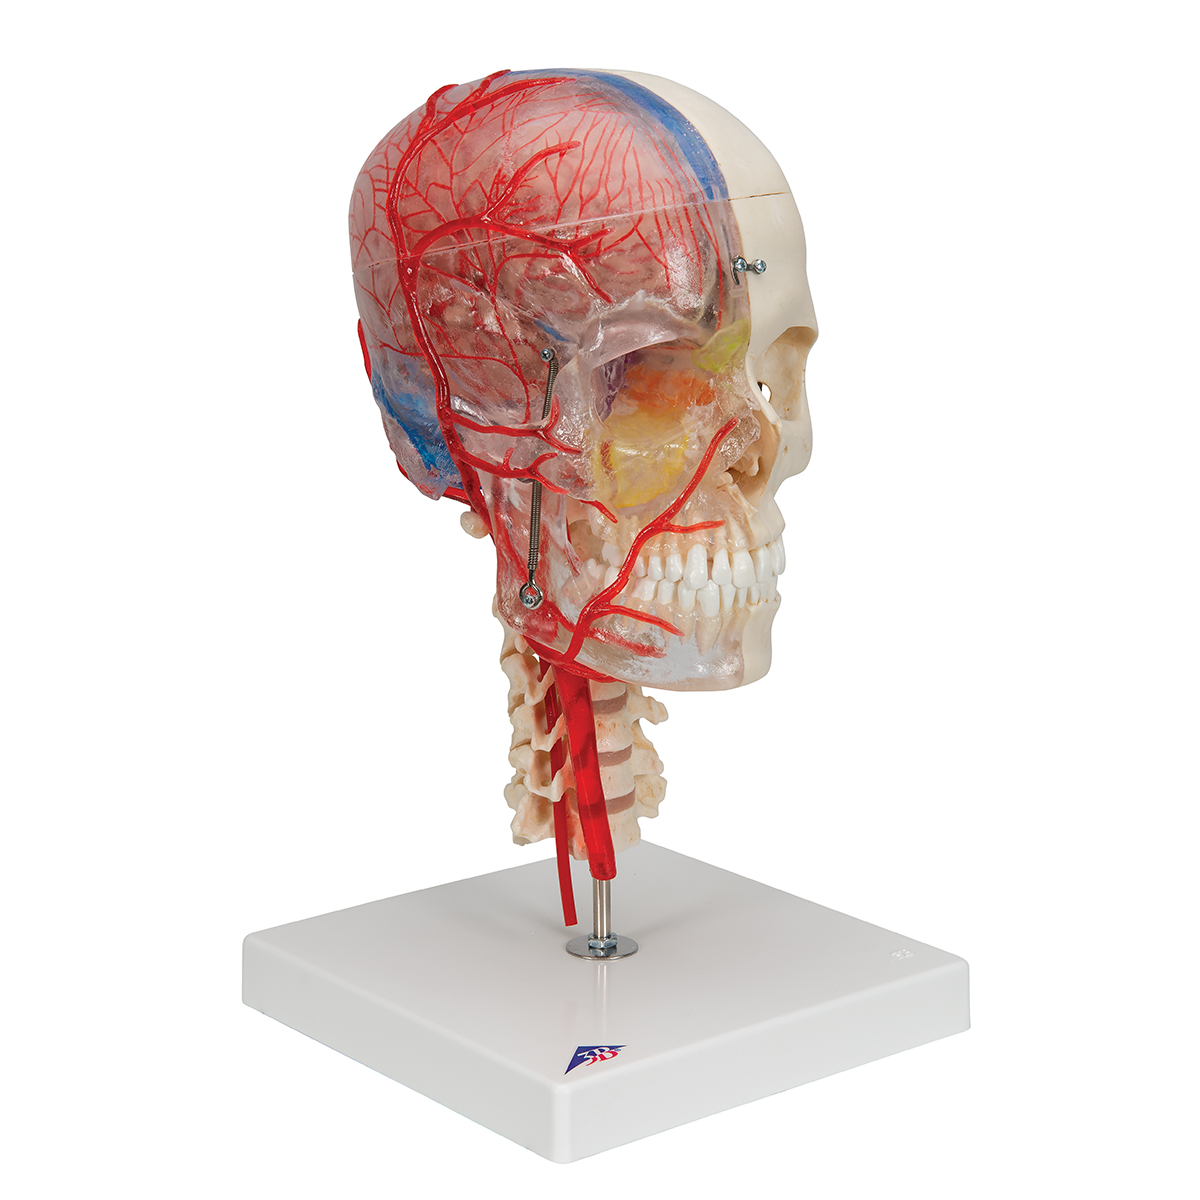 https://www.3bscientific.com/thumblibrary/A283/A283_02_1200_1200_BONElike-Human-Skull-Model-Half-Transparent-Half-Bony-Complete-with-Brain-Vertebrae-3B-Smart-Anatomy.jpg